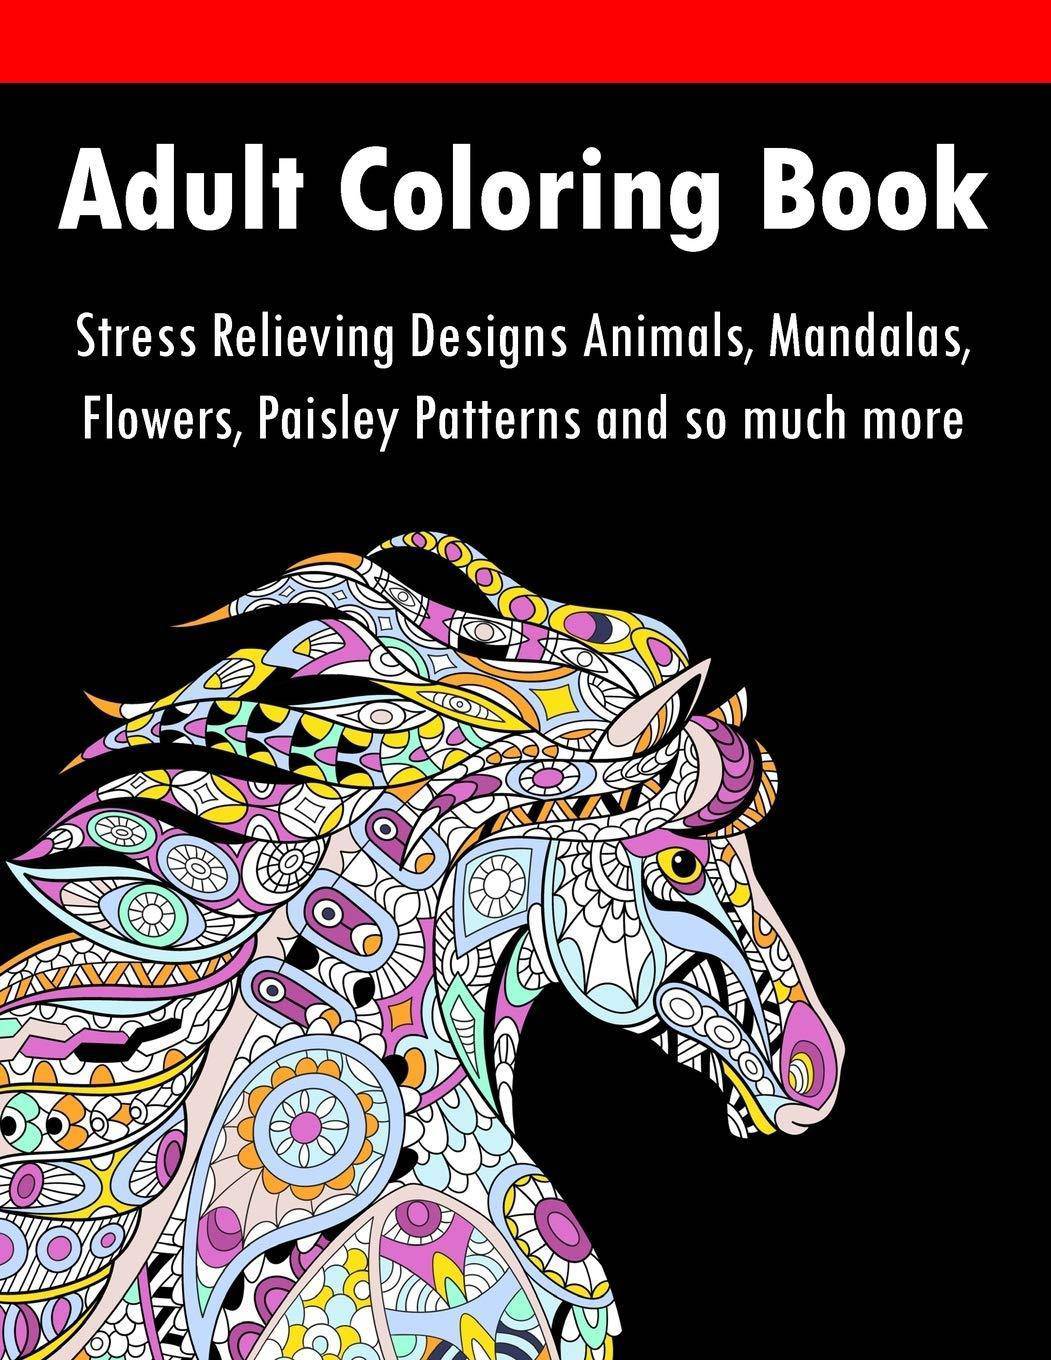 Adult Coloring Book: Stress Relieving Designs Animals, Mandalas, - SureShot Books Publishing LLC